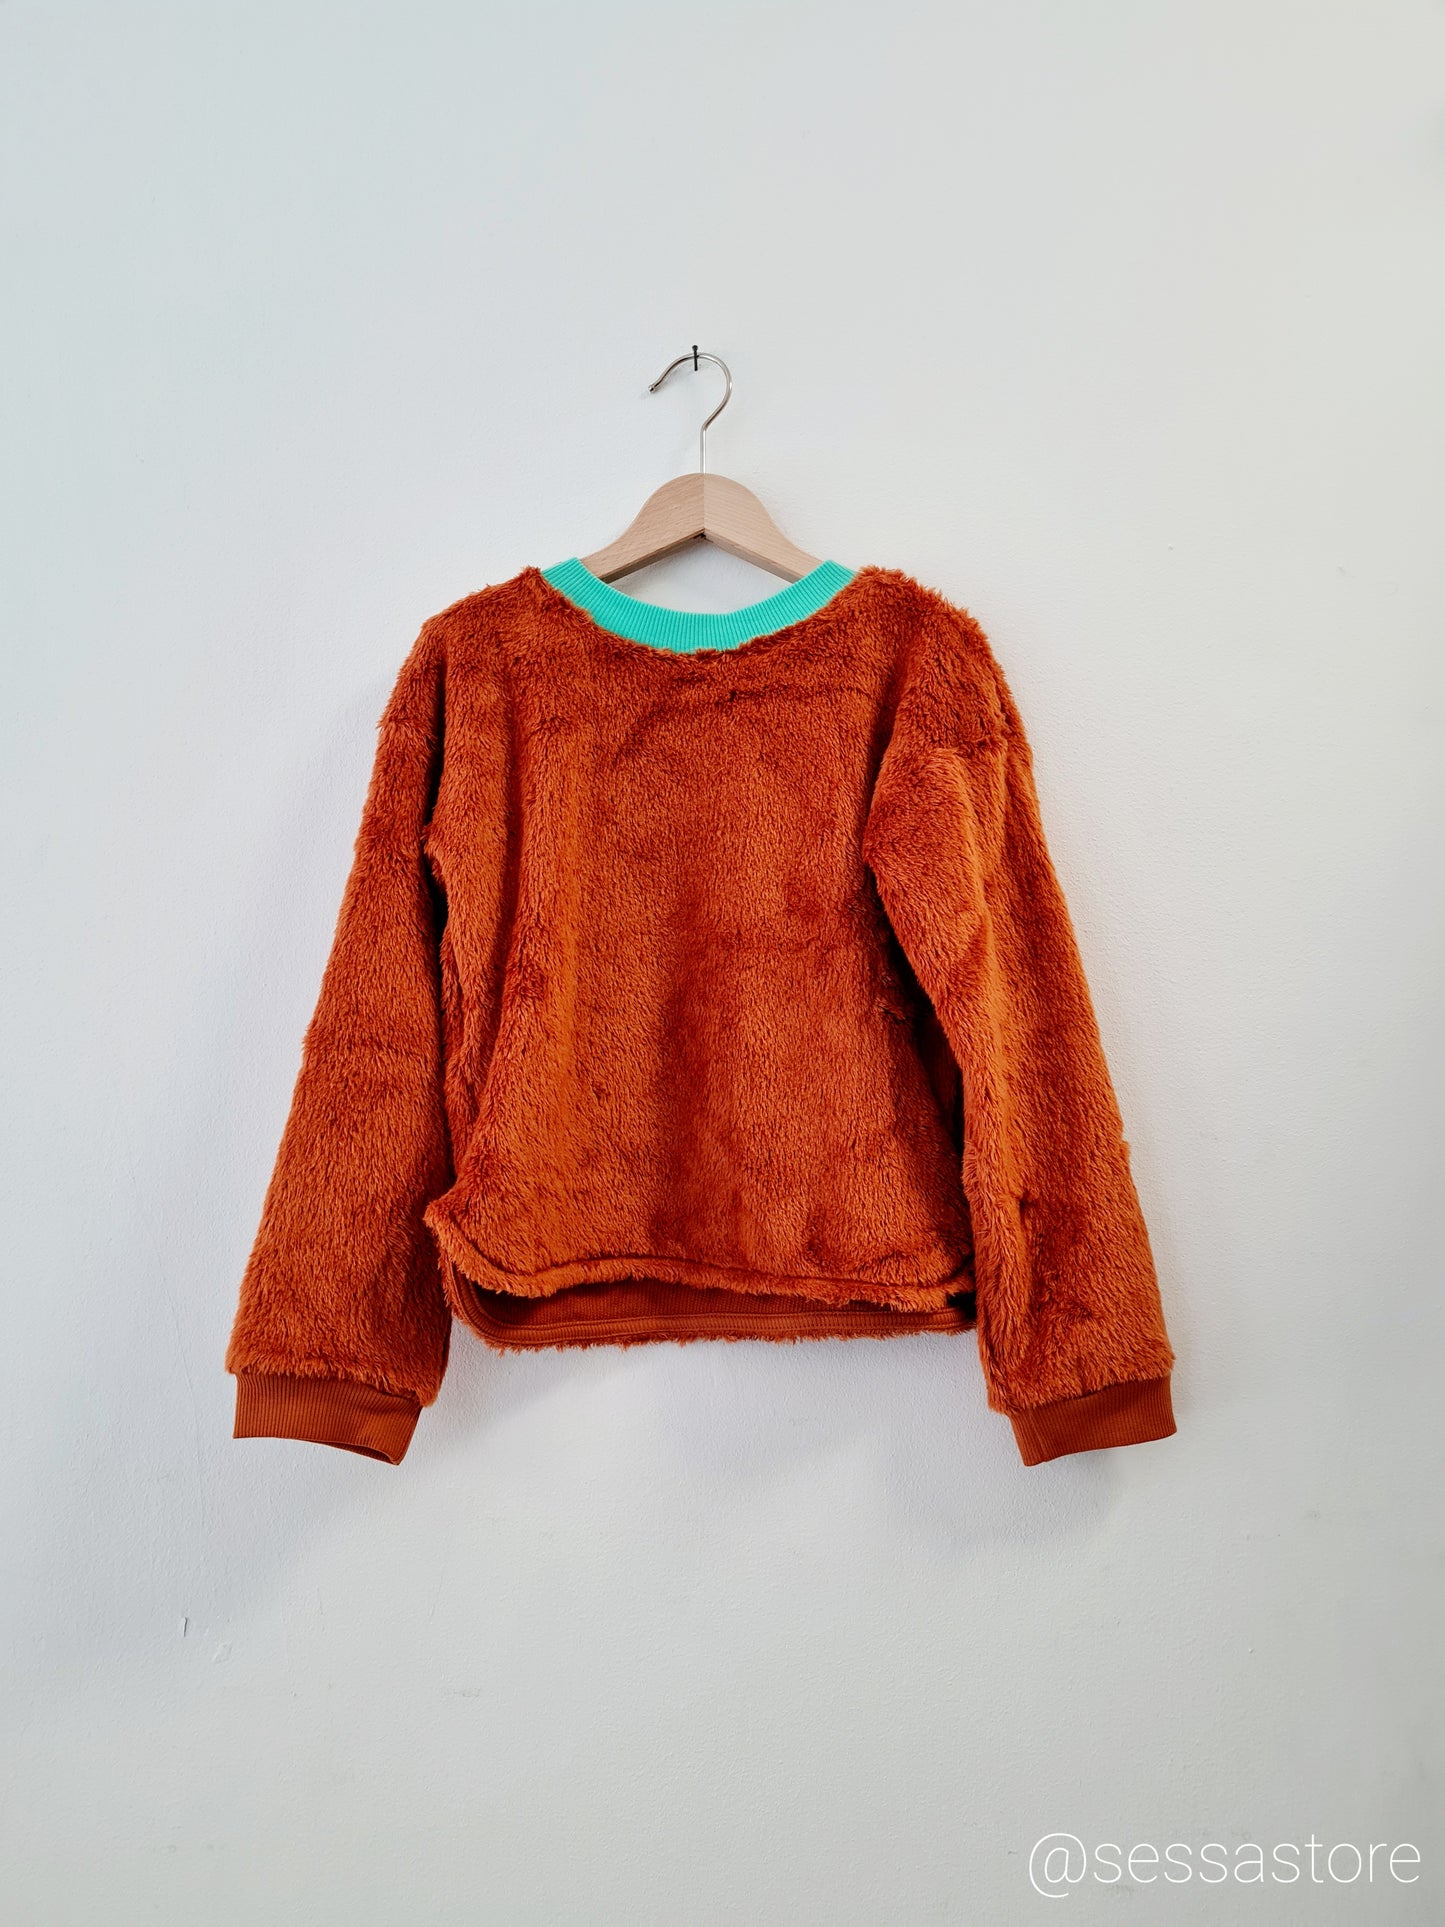 Cath Sweater - Pluche Brown